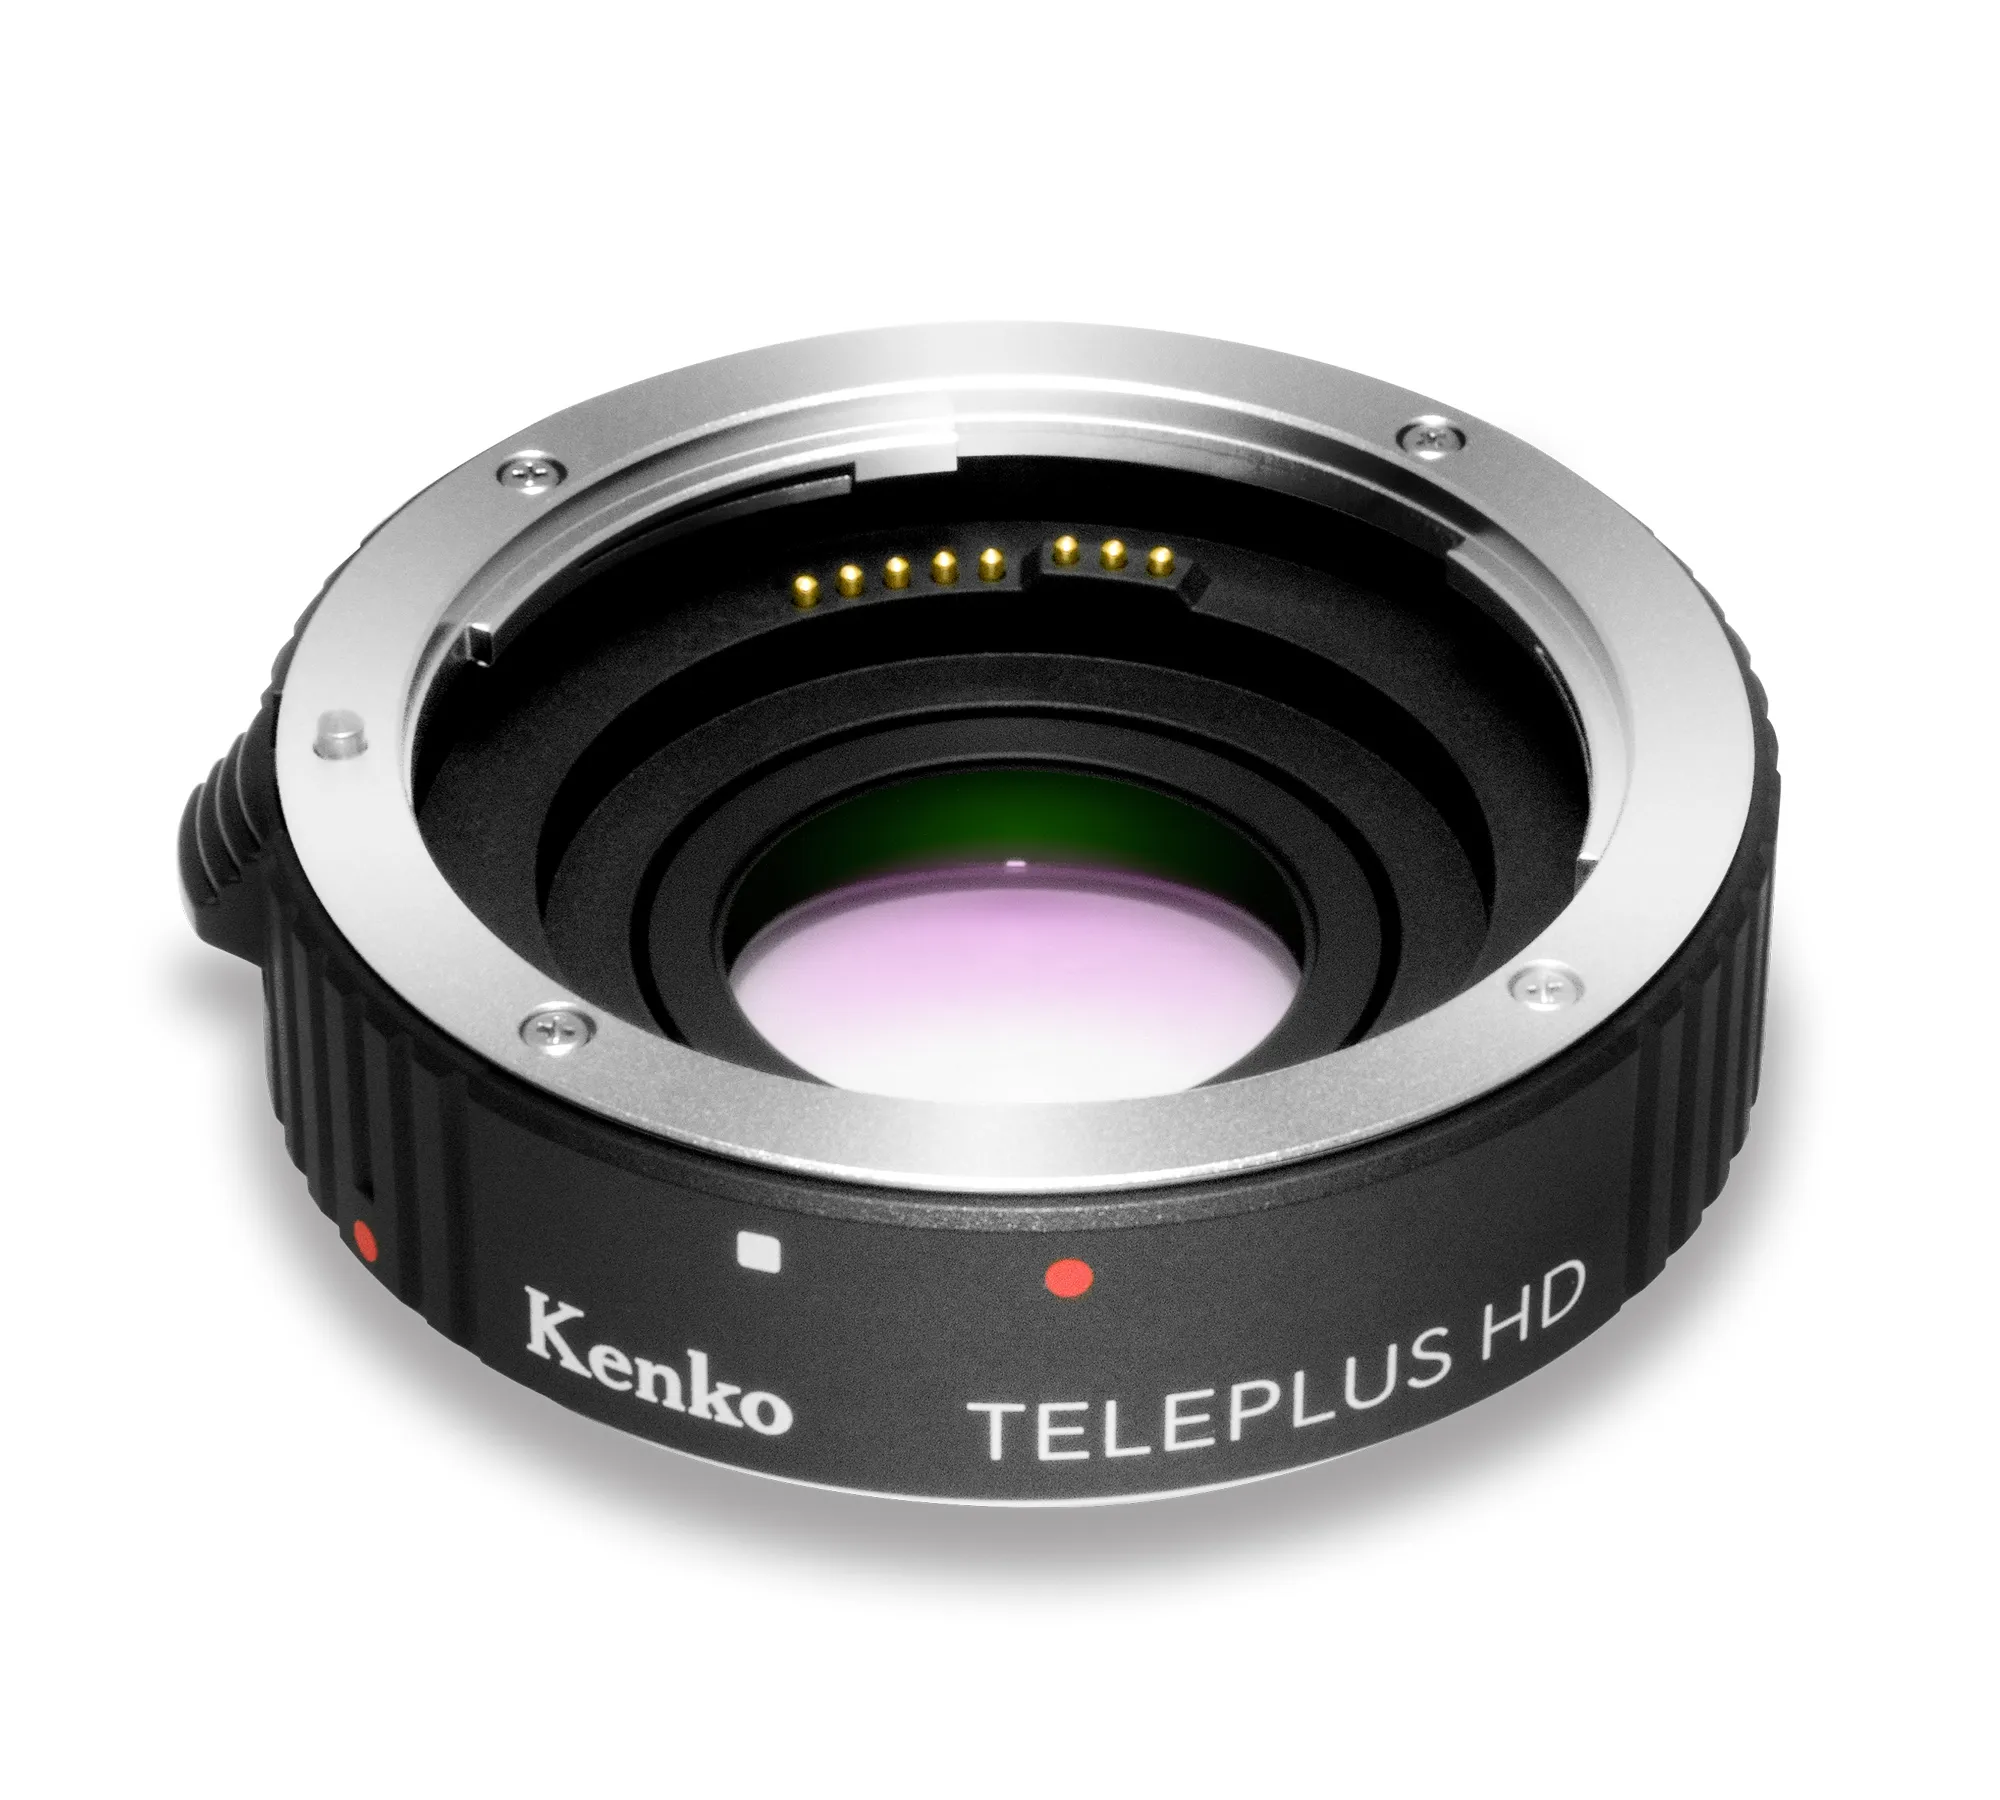 Kenko Teleplus HD DGX 1.4x Teleconverter for Canon